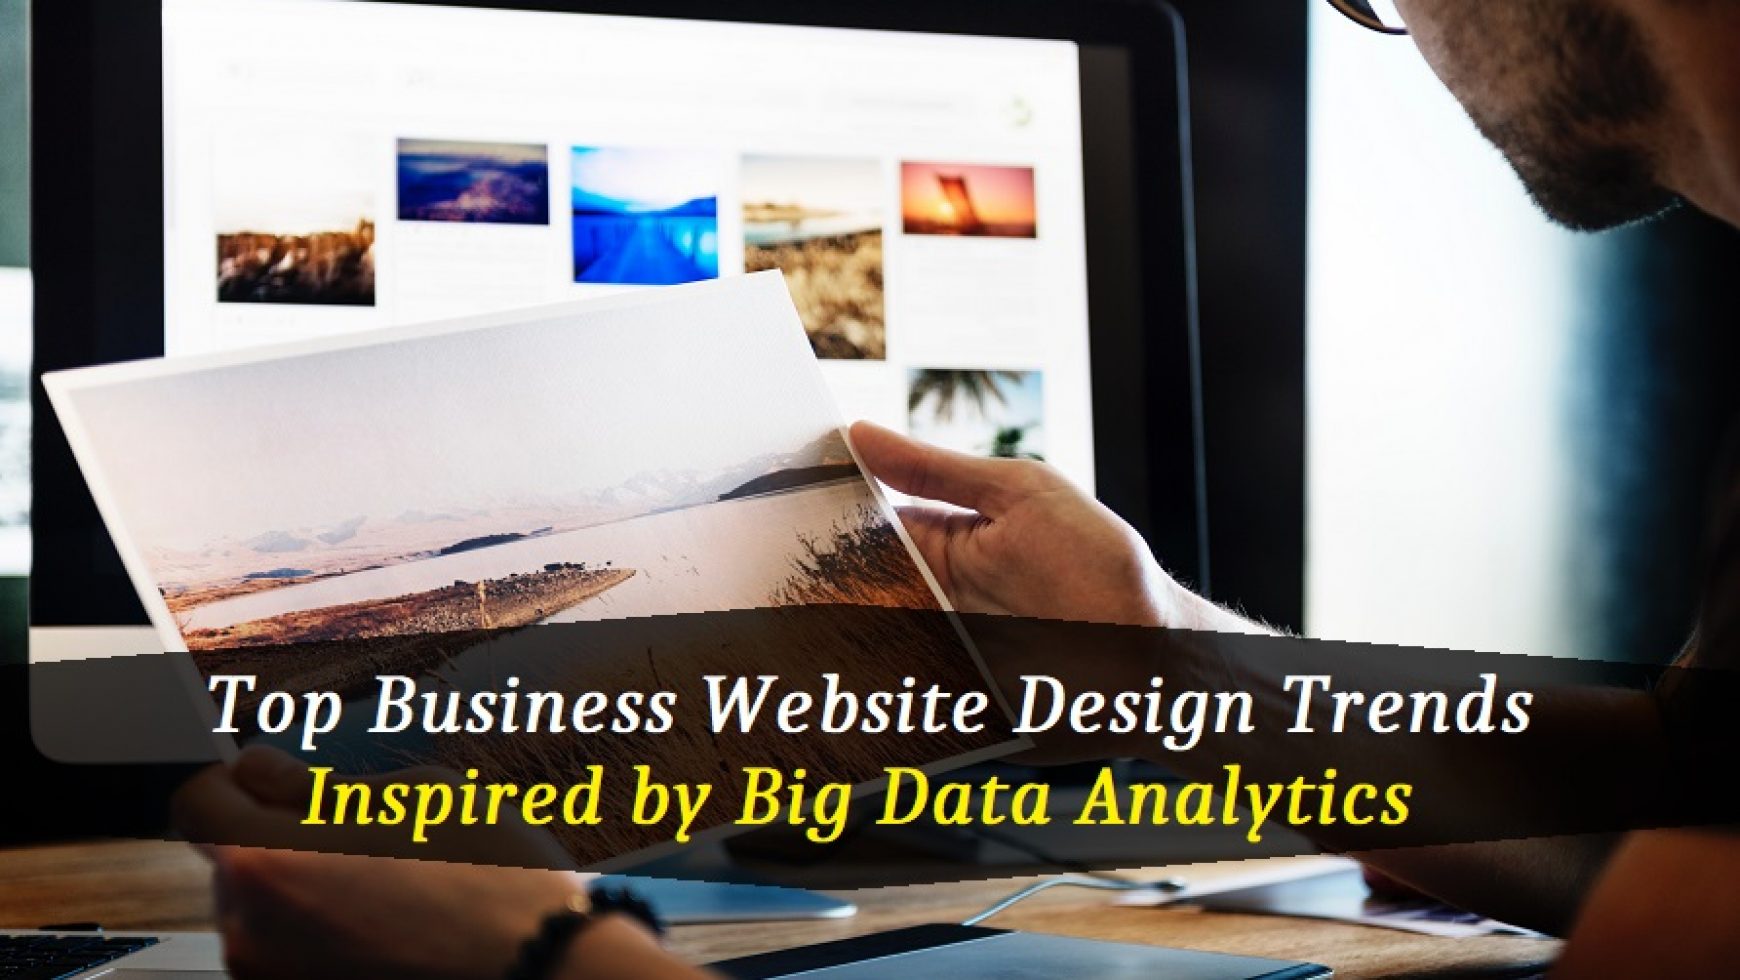 Top Business Website Design Trends Inspired by Big Data Analytics